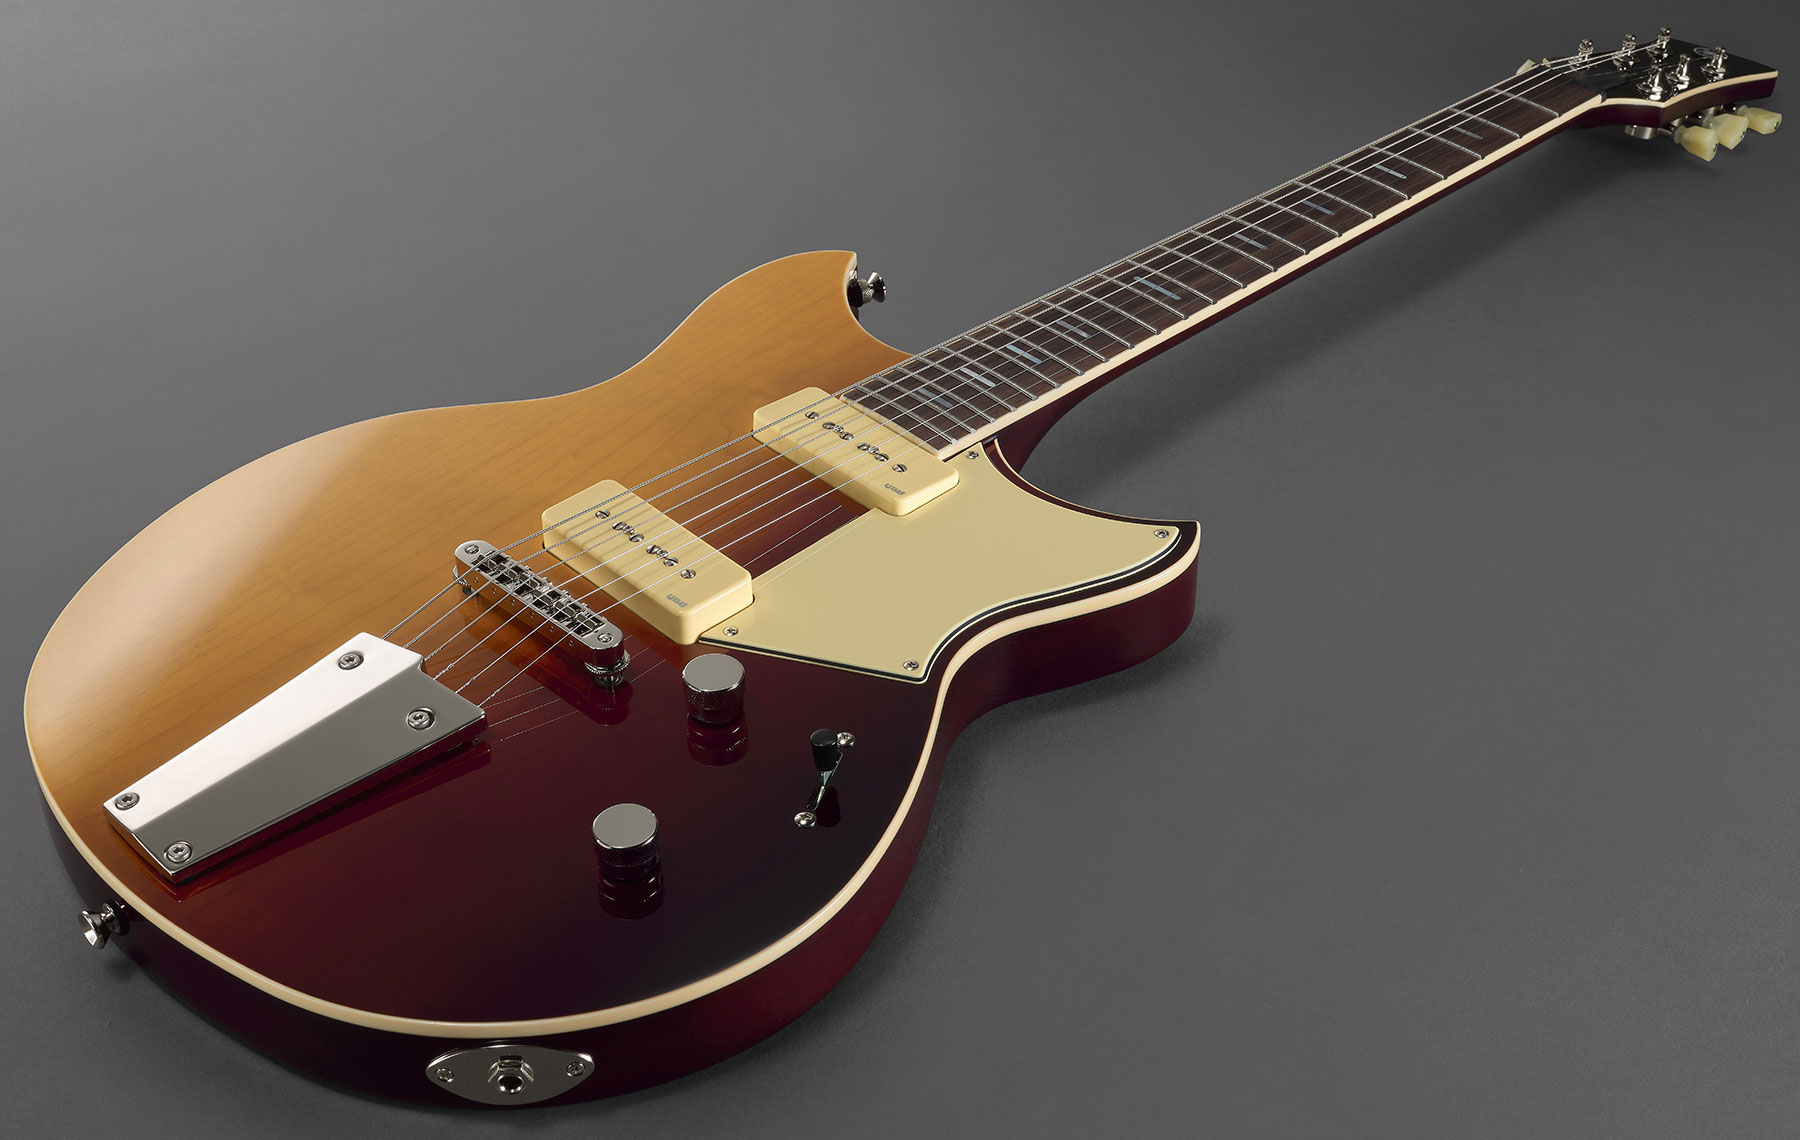 Yamaha Rss02t Revstar Standard 2p90 Ht Rw - Sunset Sunburst - Double cut electric guitar - Variation 3